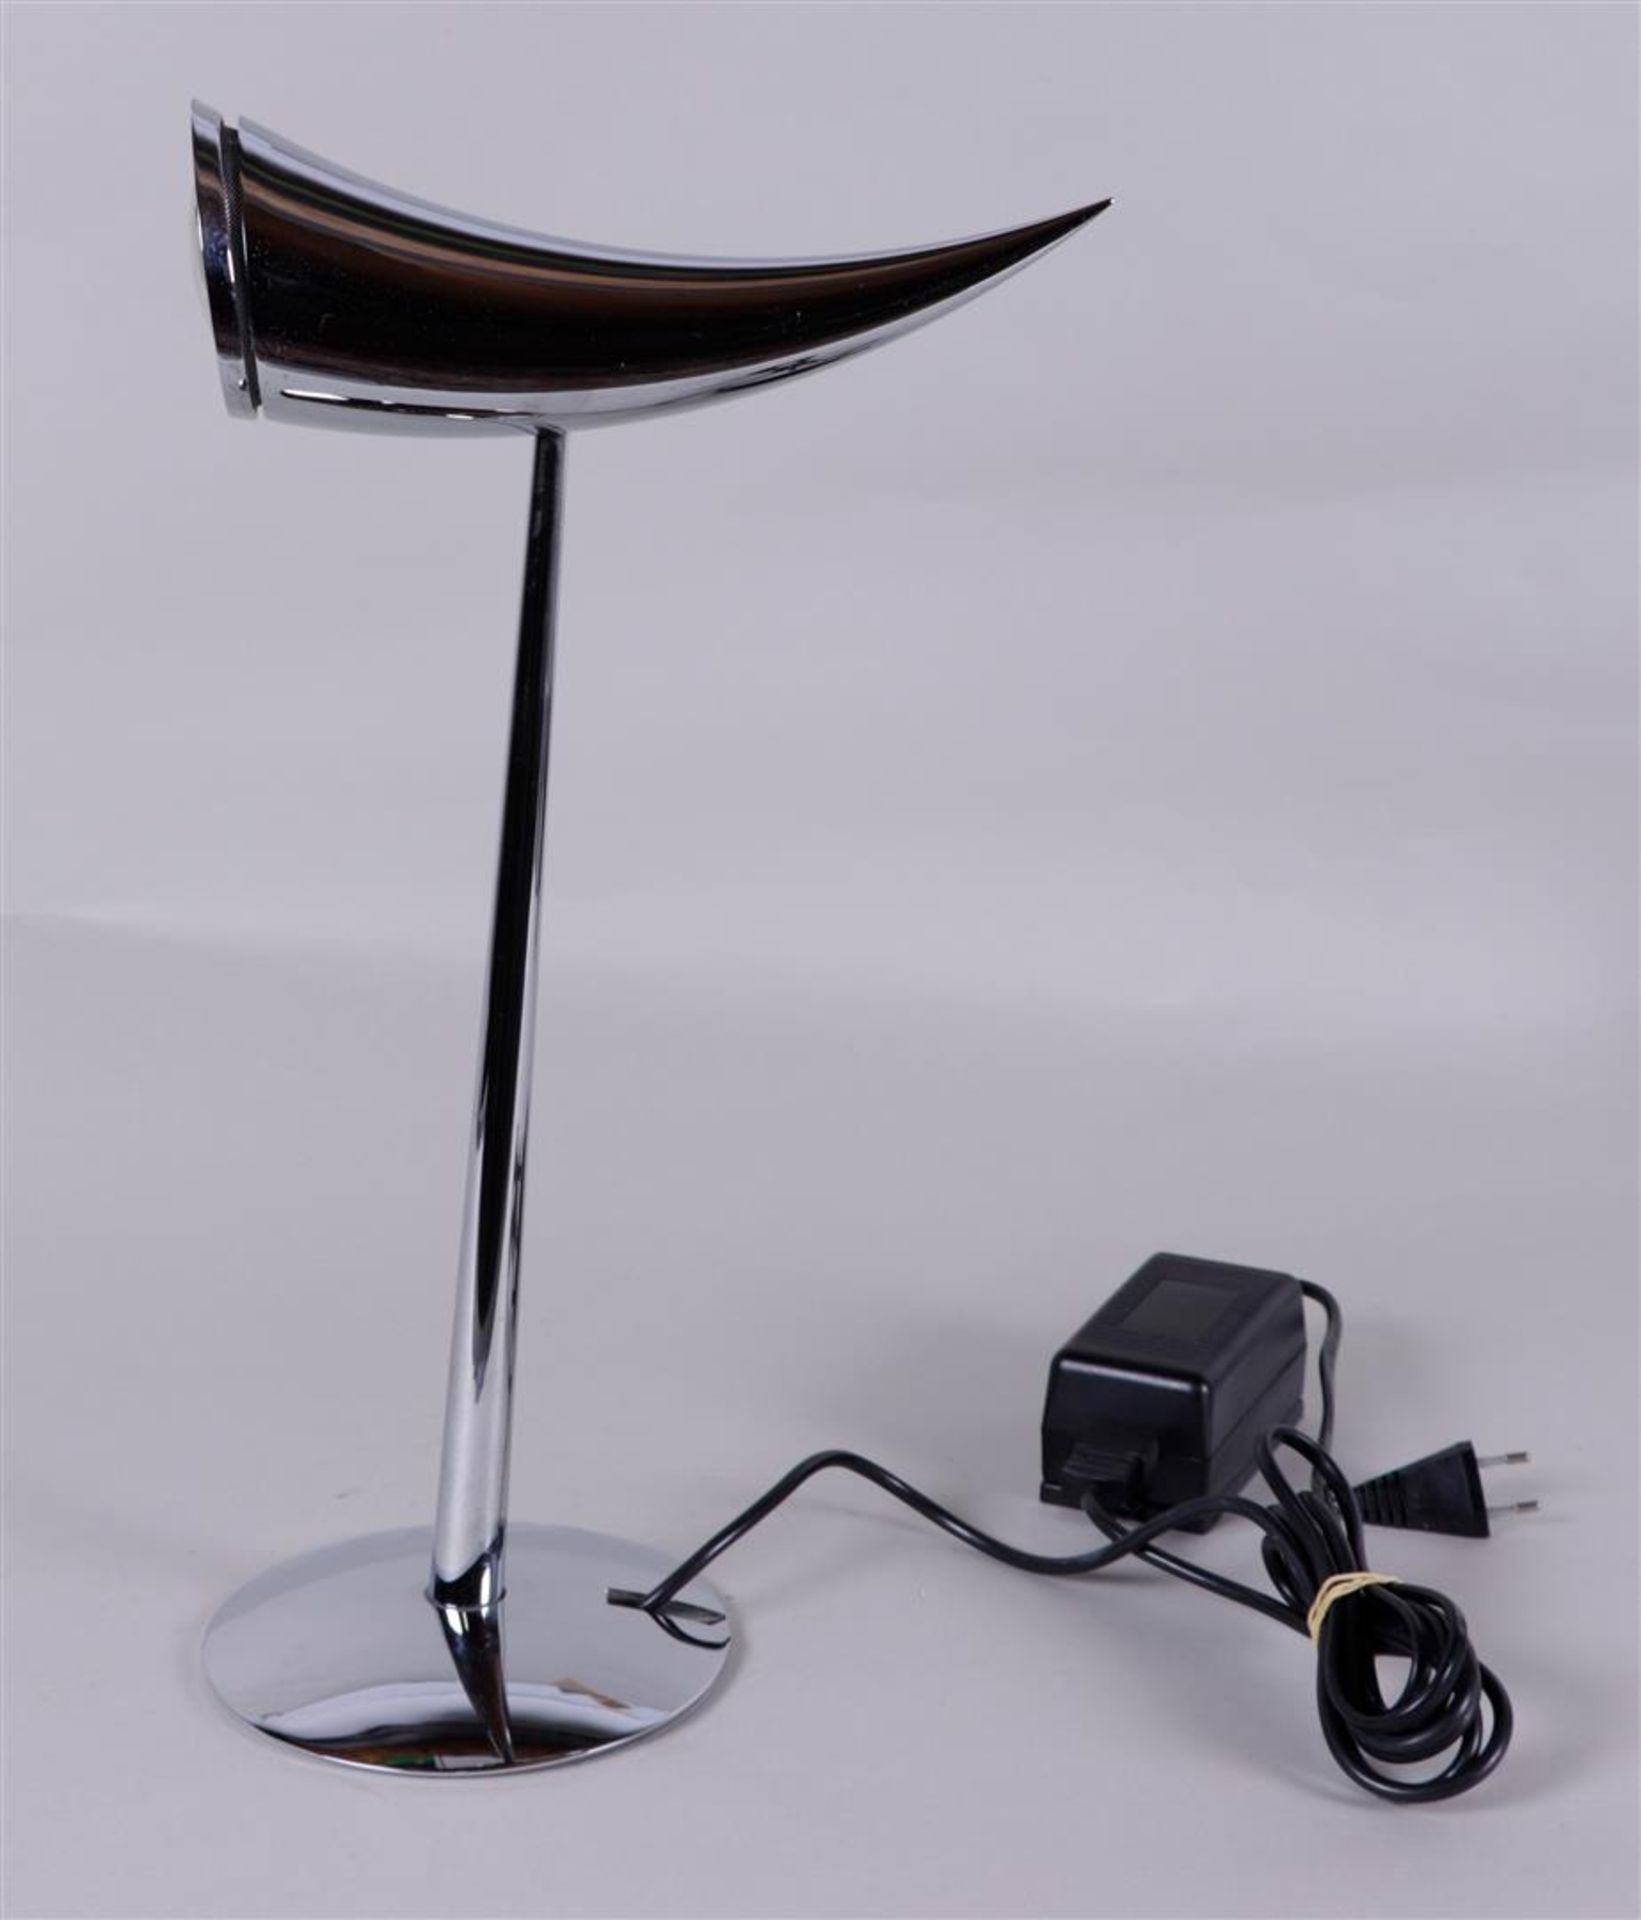 Philippe Starck, Ara table lamp. 2nd half of the 20th century.
56 × 24 × 18 cm.